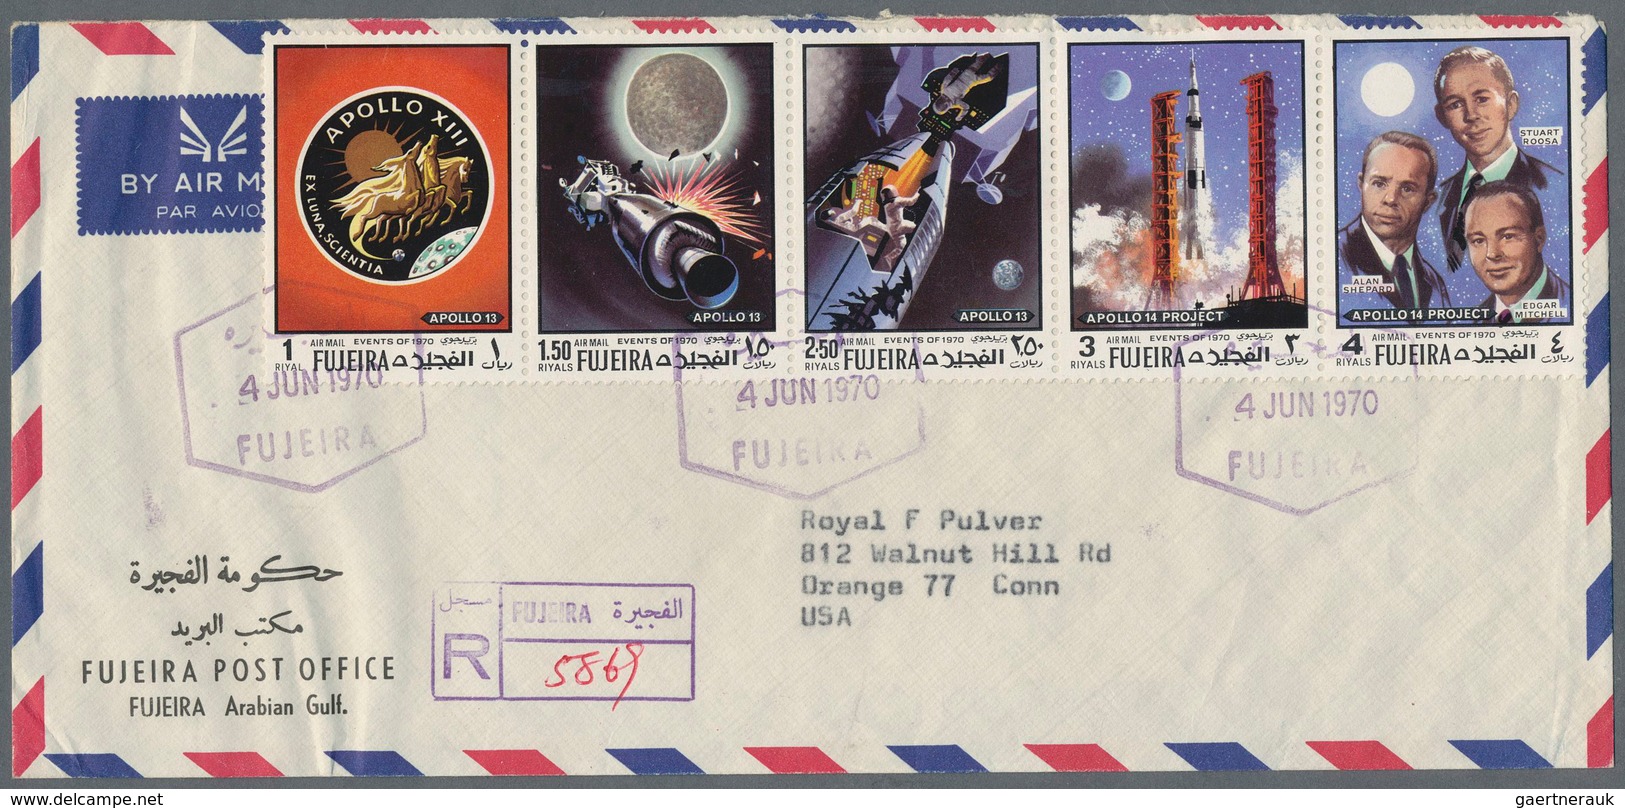 Thematik: Raumfahrt / astronautics: 1969/1973, Ajman/Fujeira, group of 18 covers (registered airmail